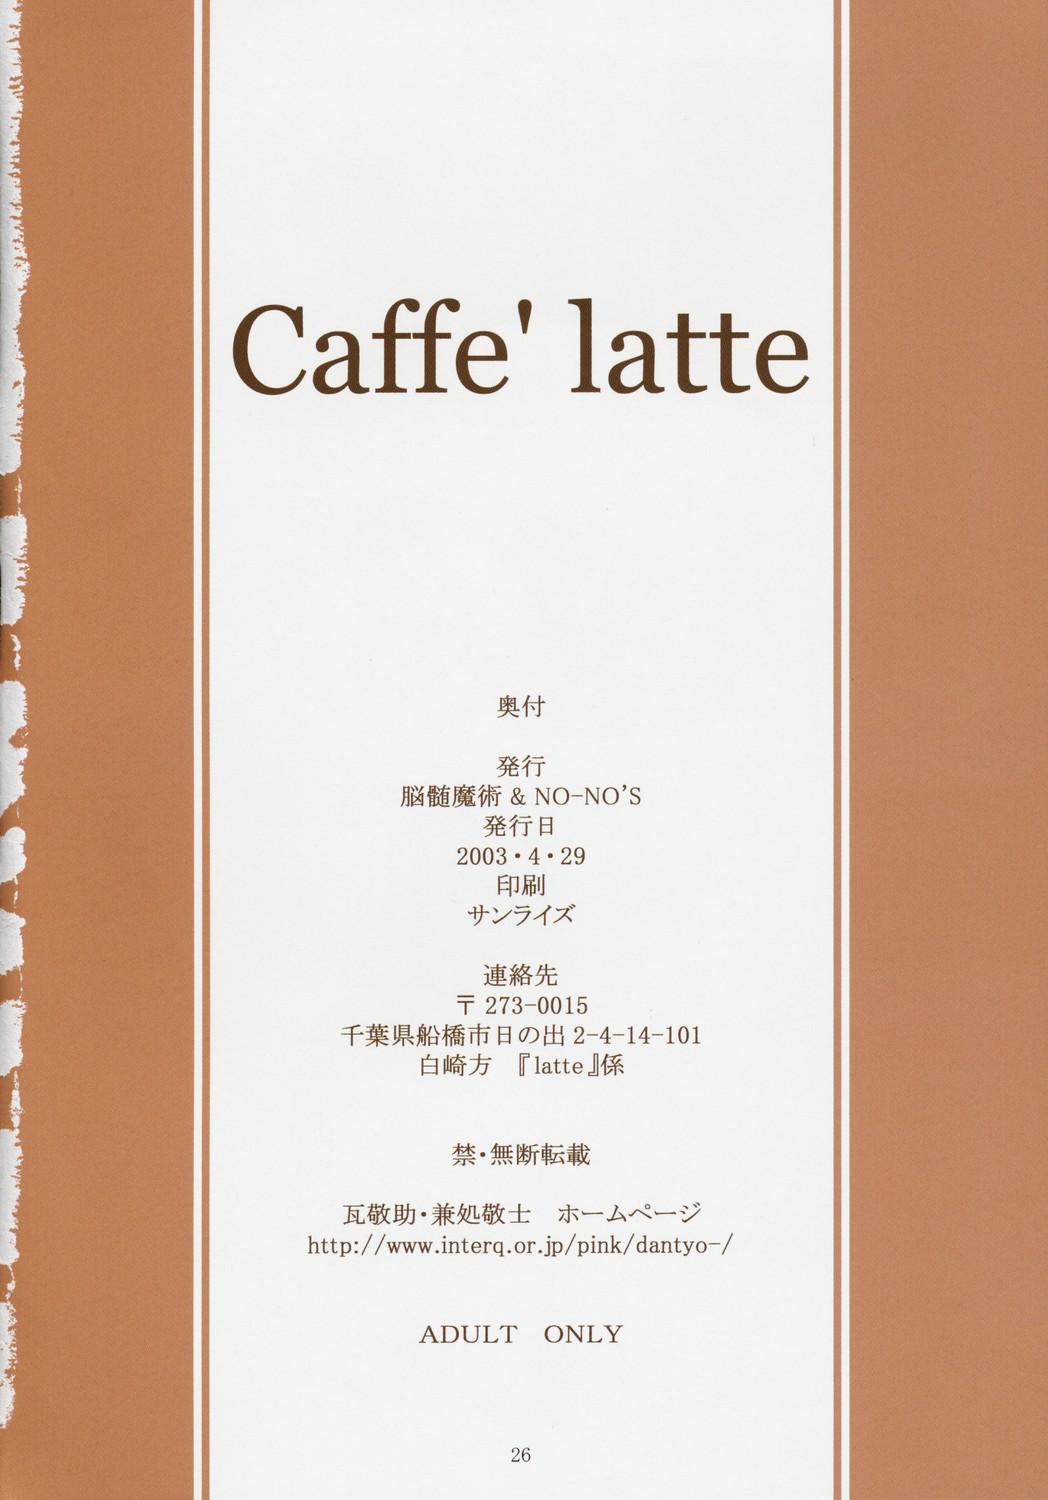 Caffe' latte 25